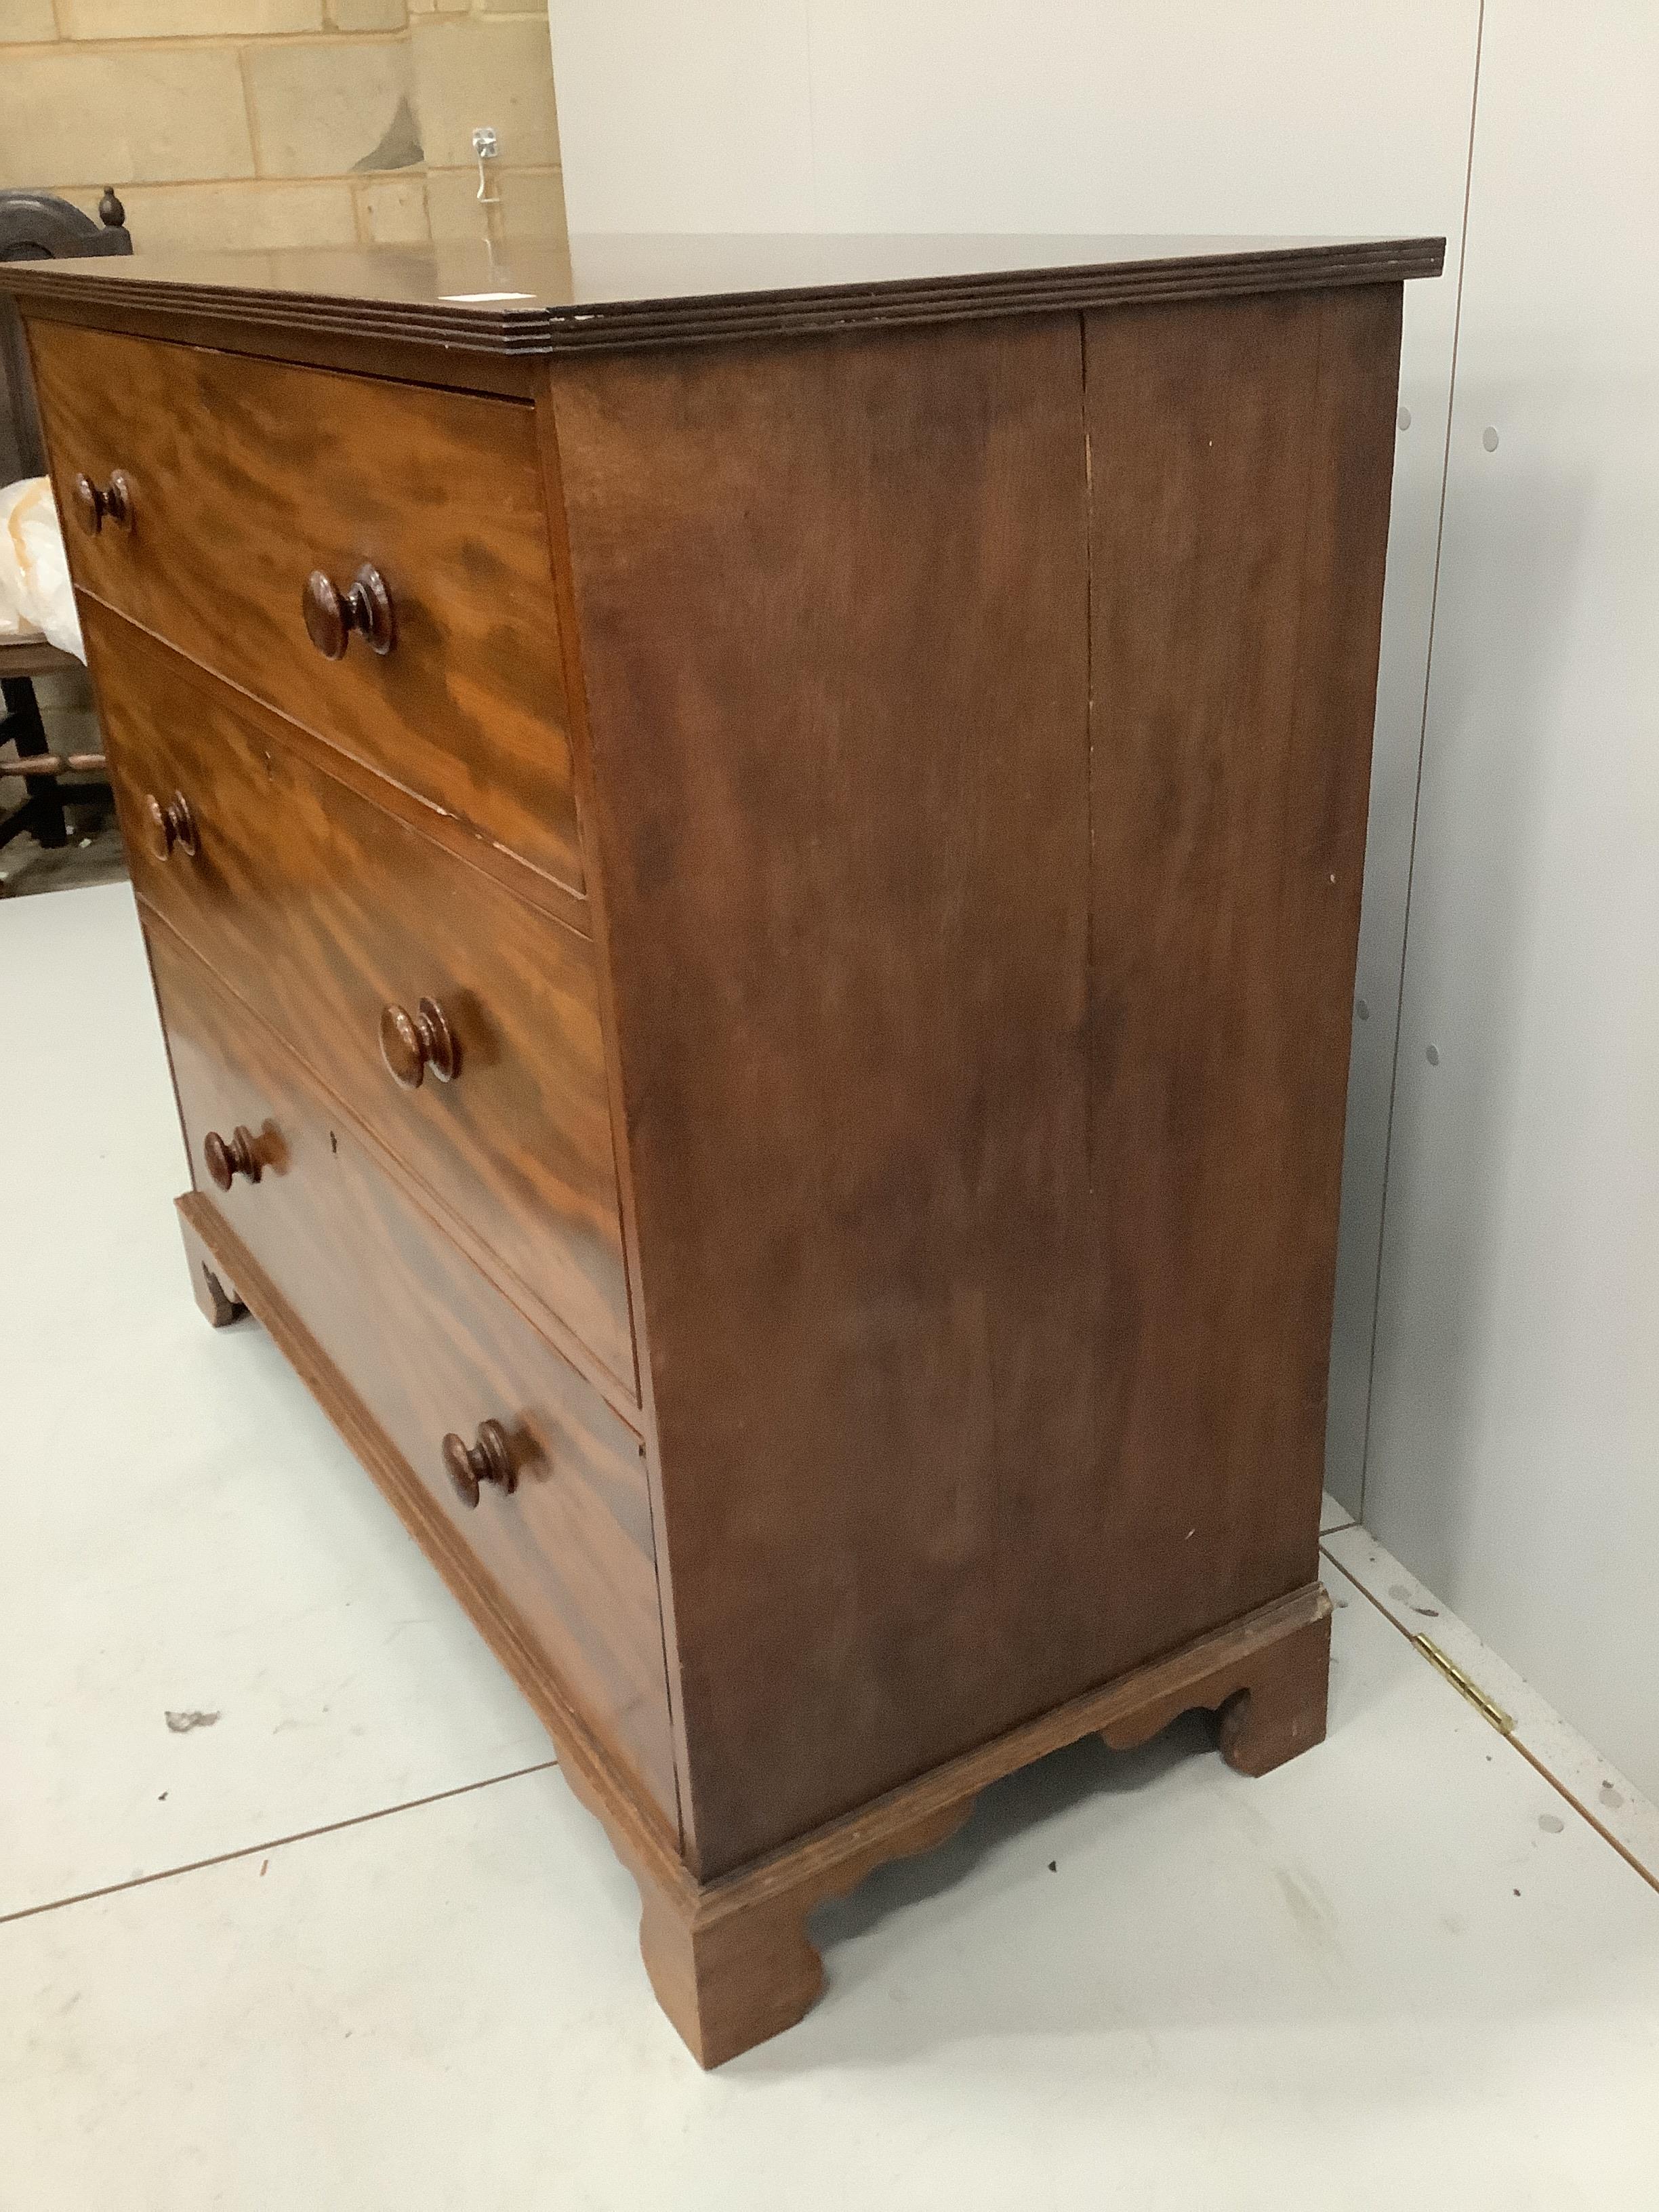 A George IV mahogany three drawer chest, width 116cm, depth 53cm, height 102cm